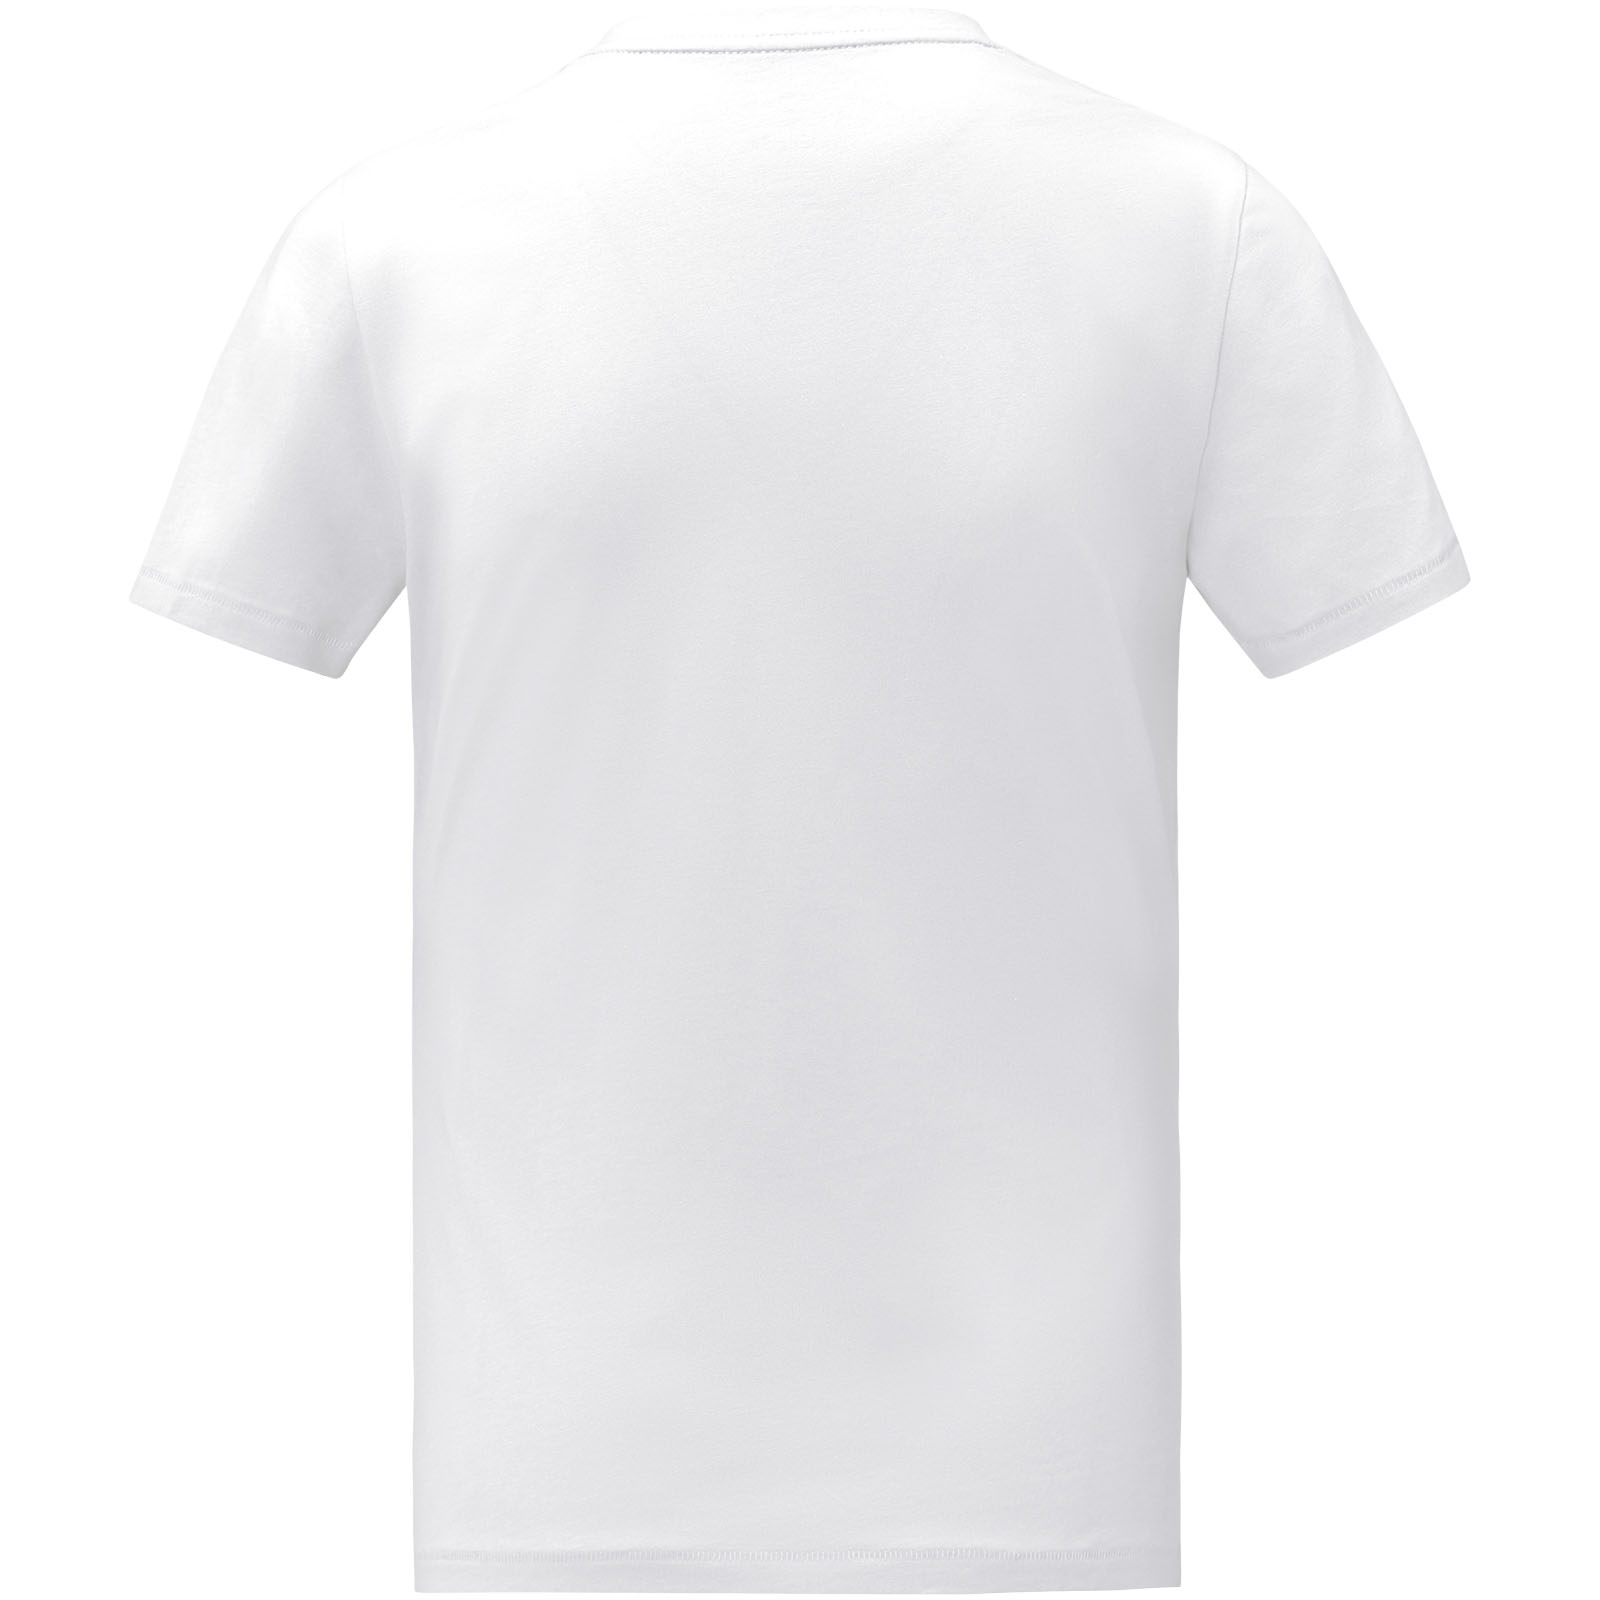 Advertising T-shirts - Somoto short sleeve men's V-neck t-shirt  - 2